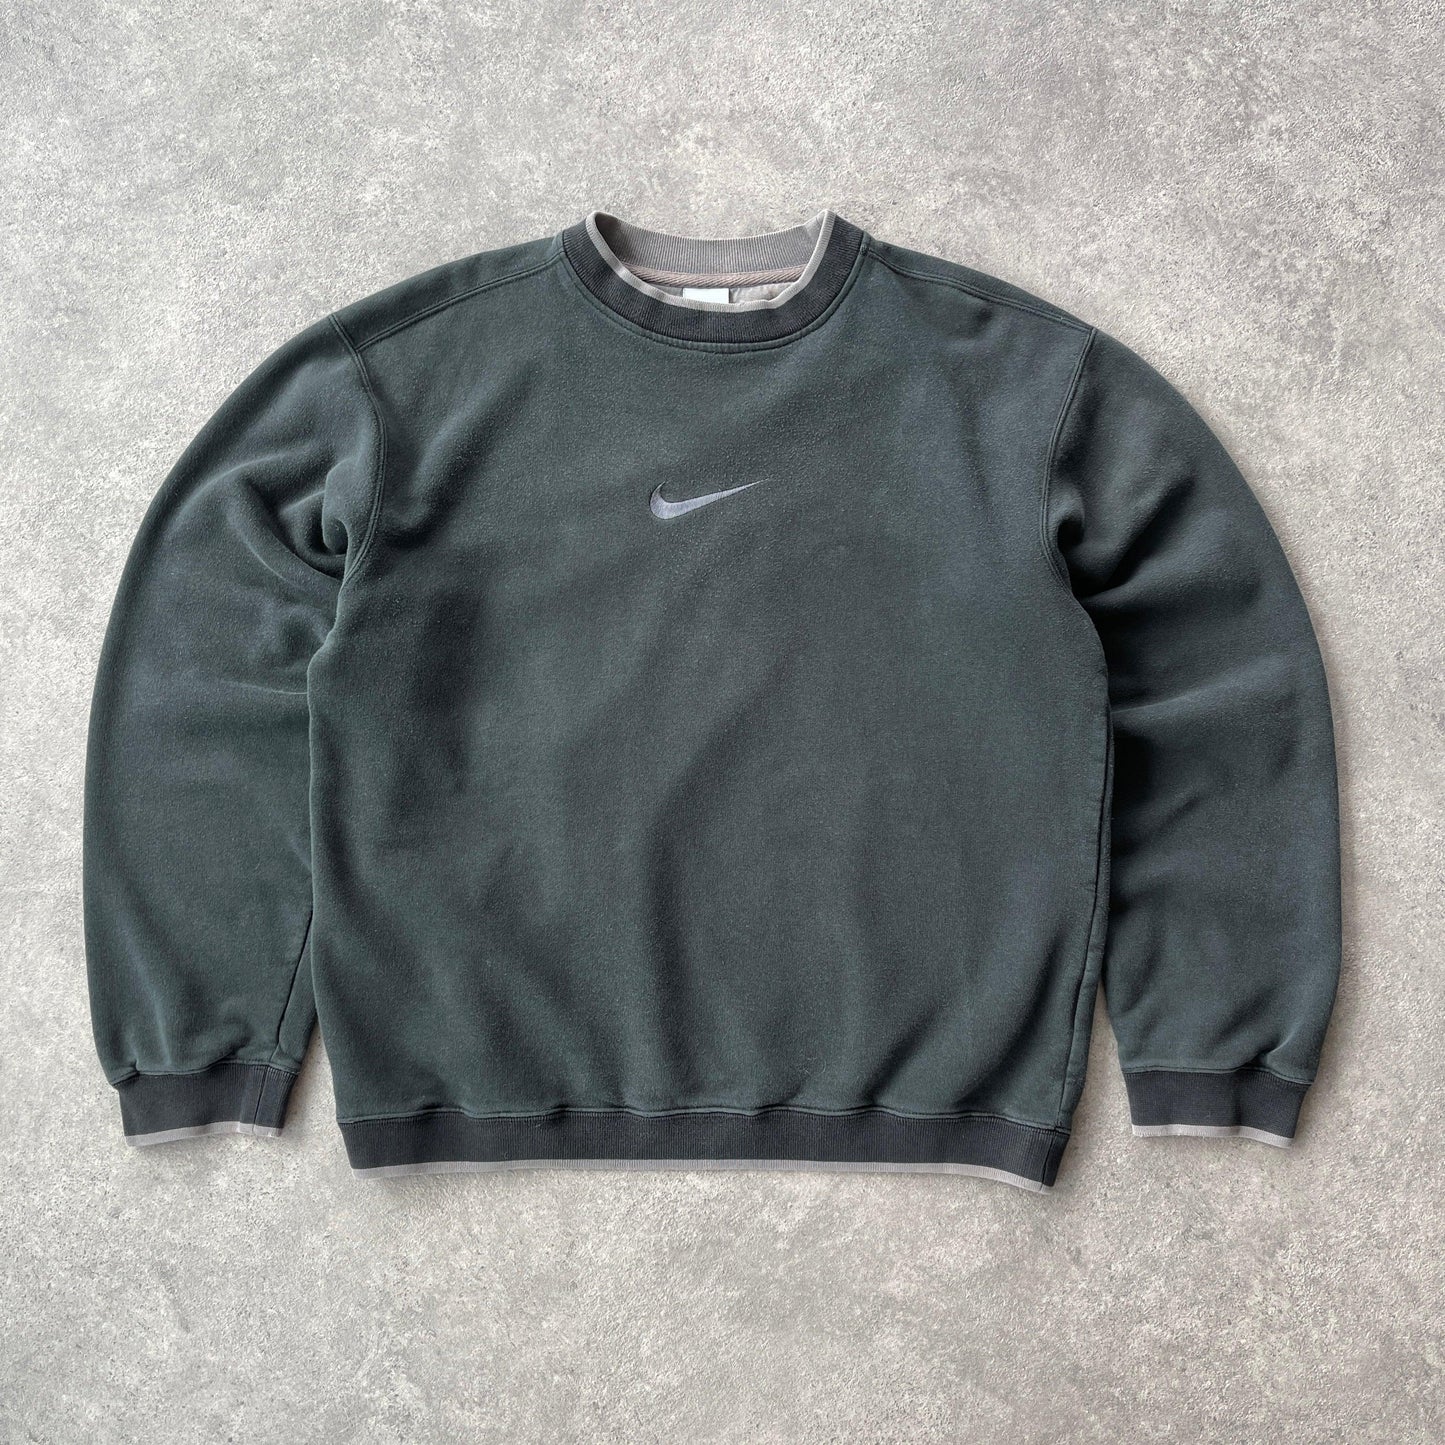 Nike 2000s heavyweight embroidered sweatshirt (L)